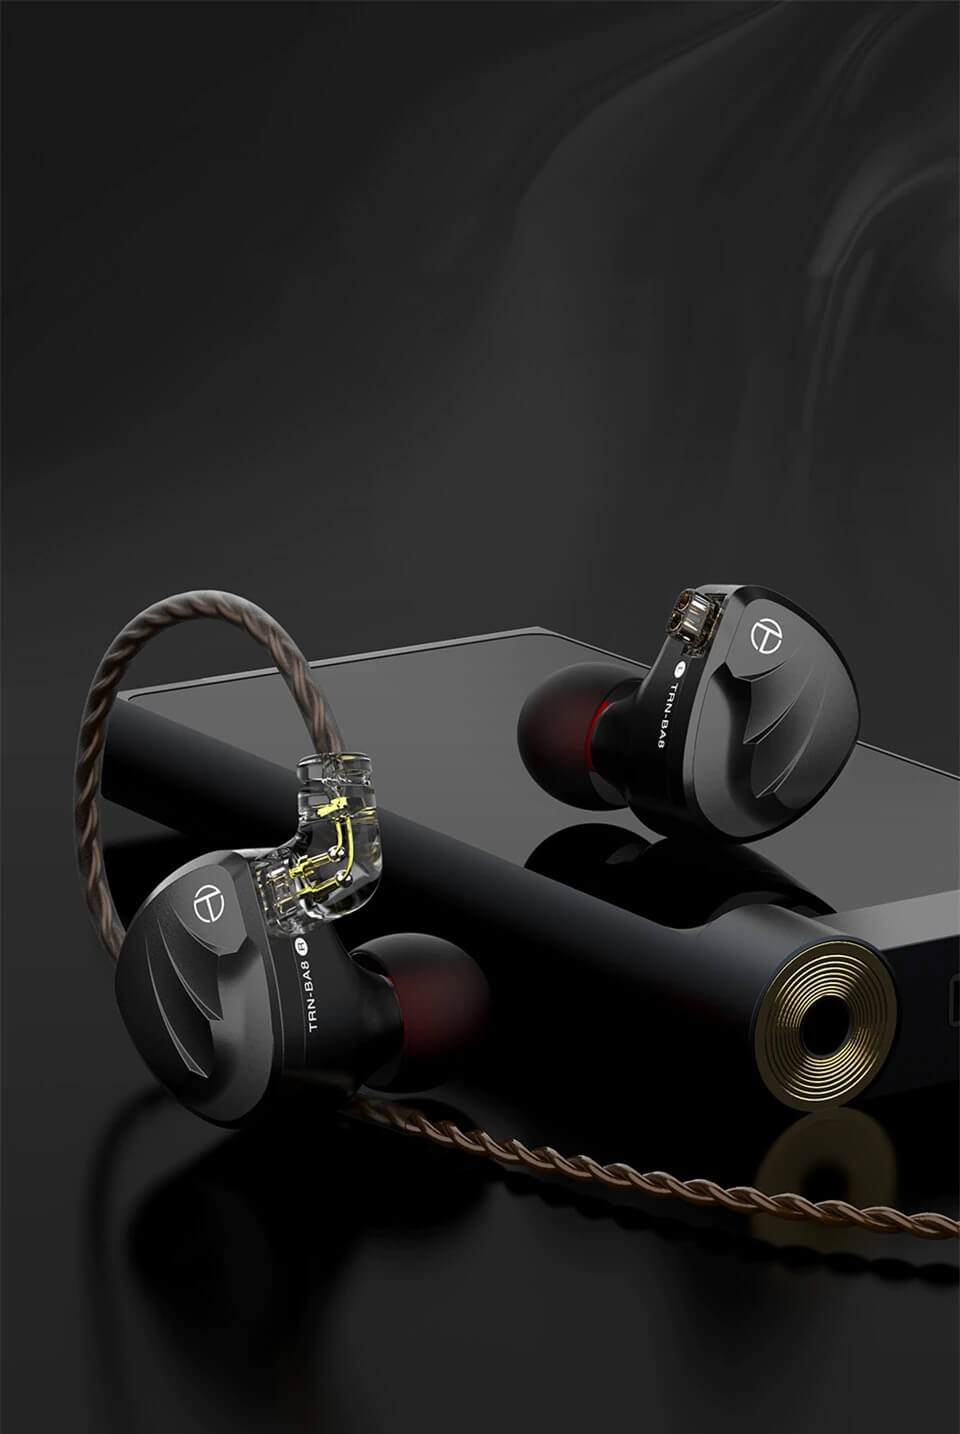 TRN BA8 8 high-resolution balanced armature driver's earphone